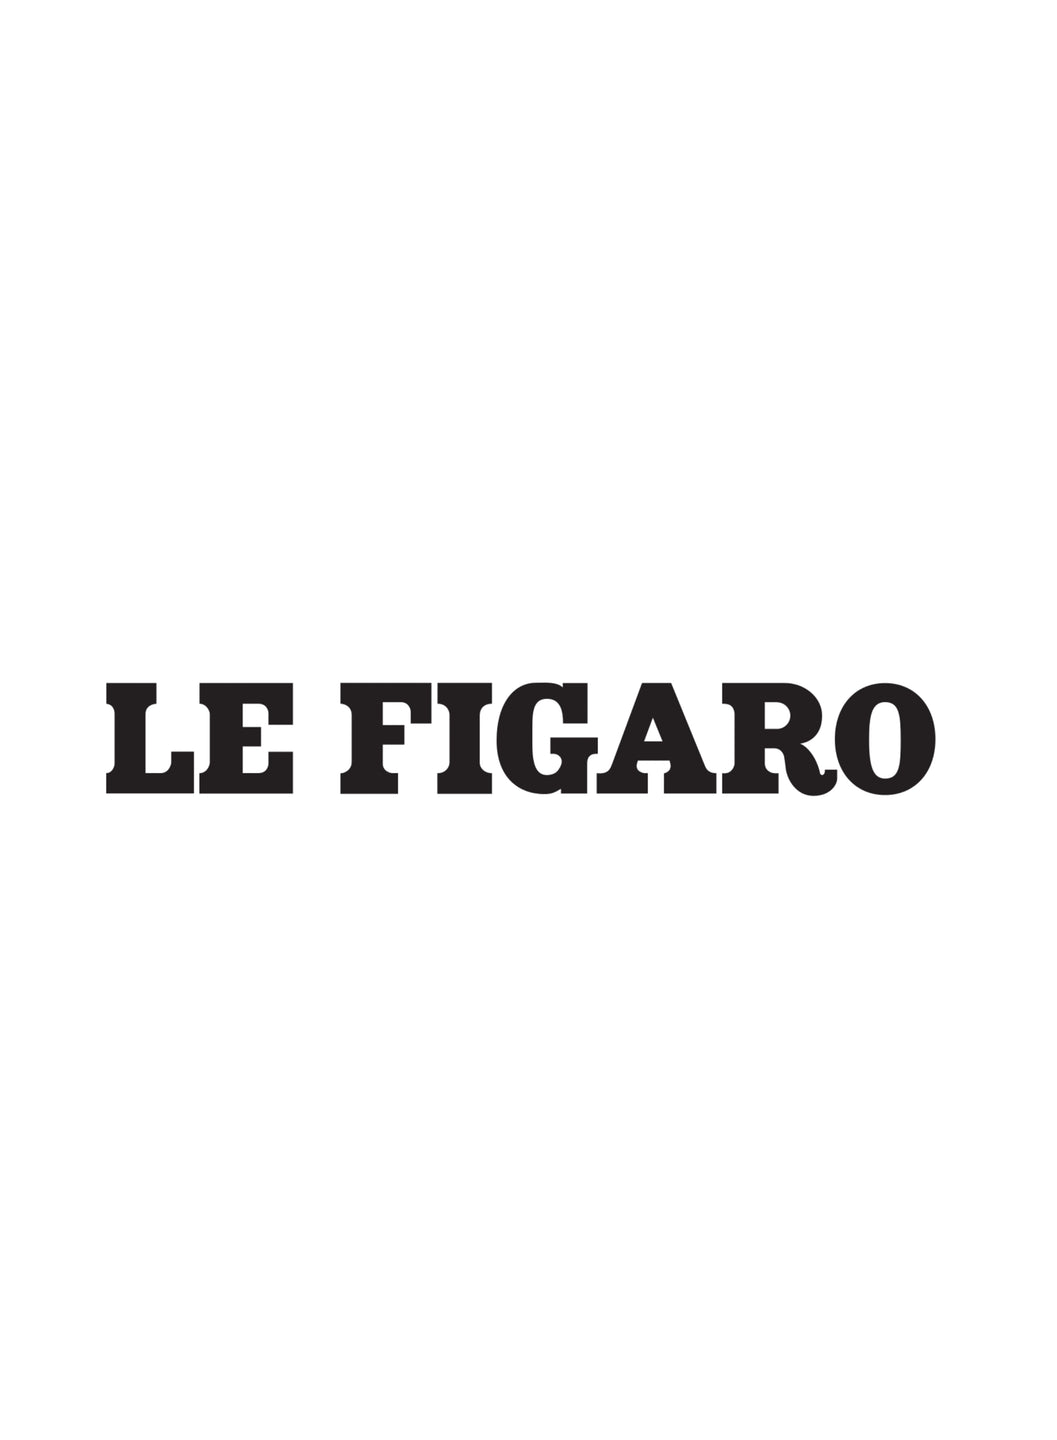 Le Figaro - Print